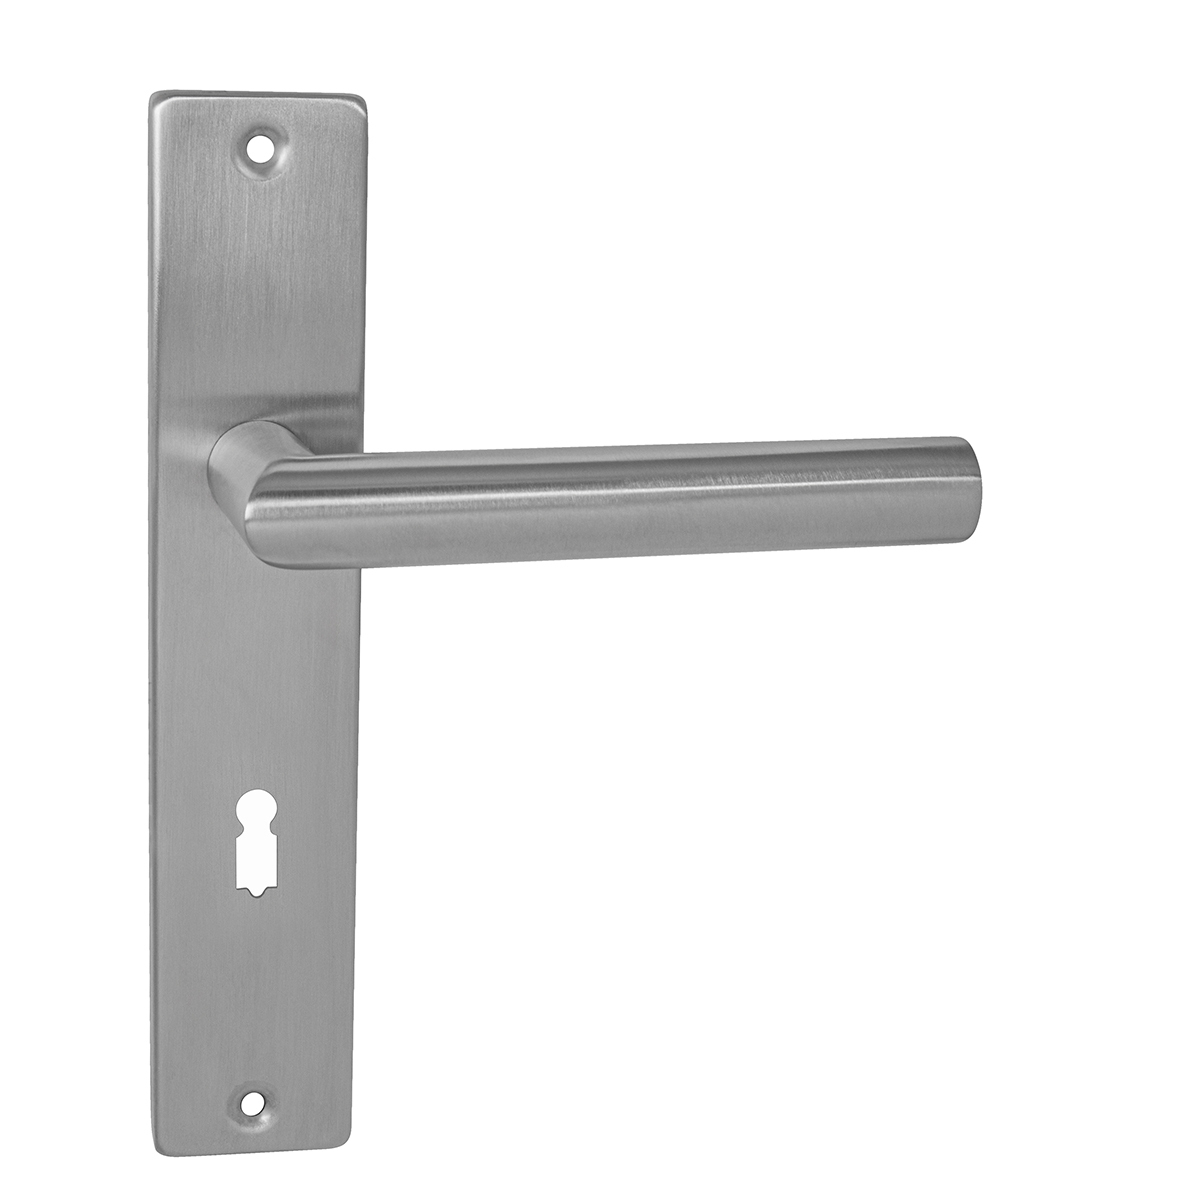 MP - FAVORIT - SH WC kľúč, 90 mm, kľučka/kľučka